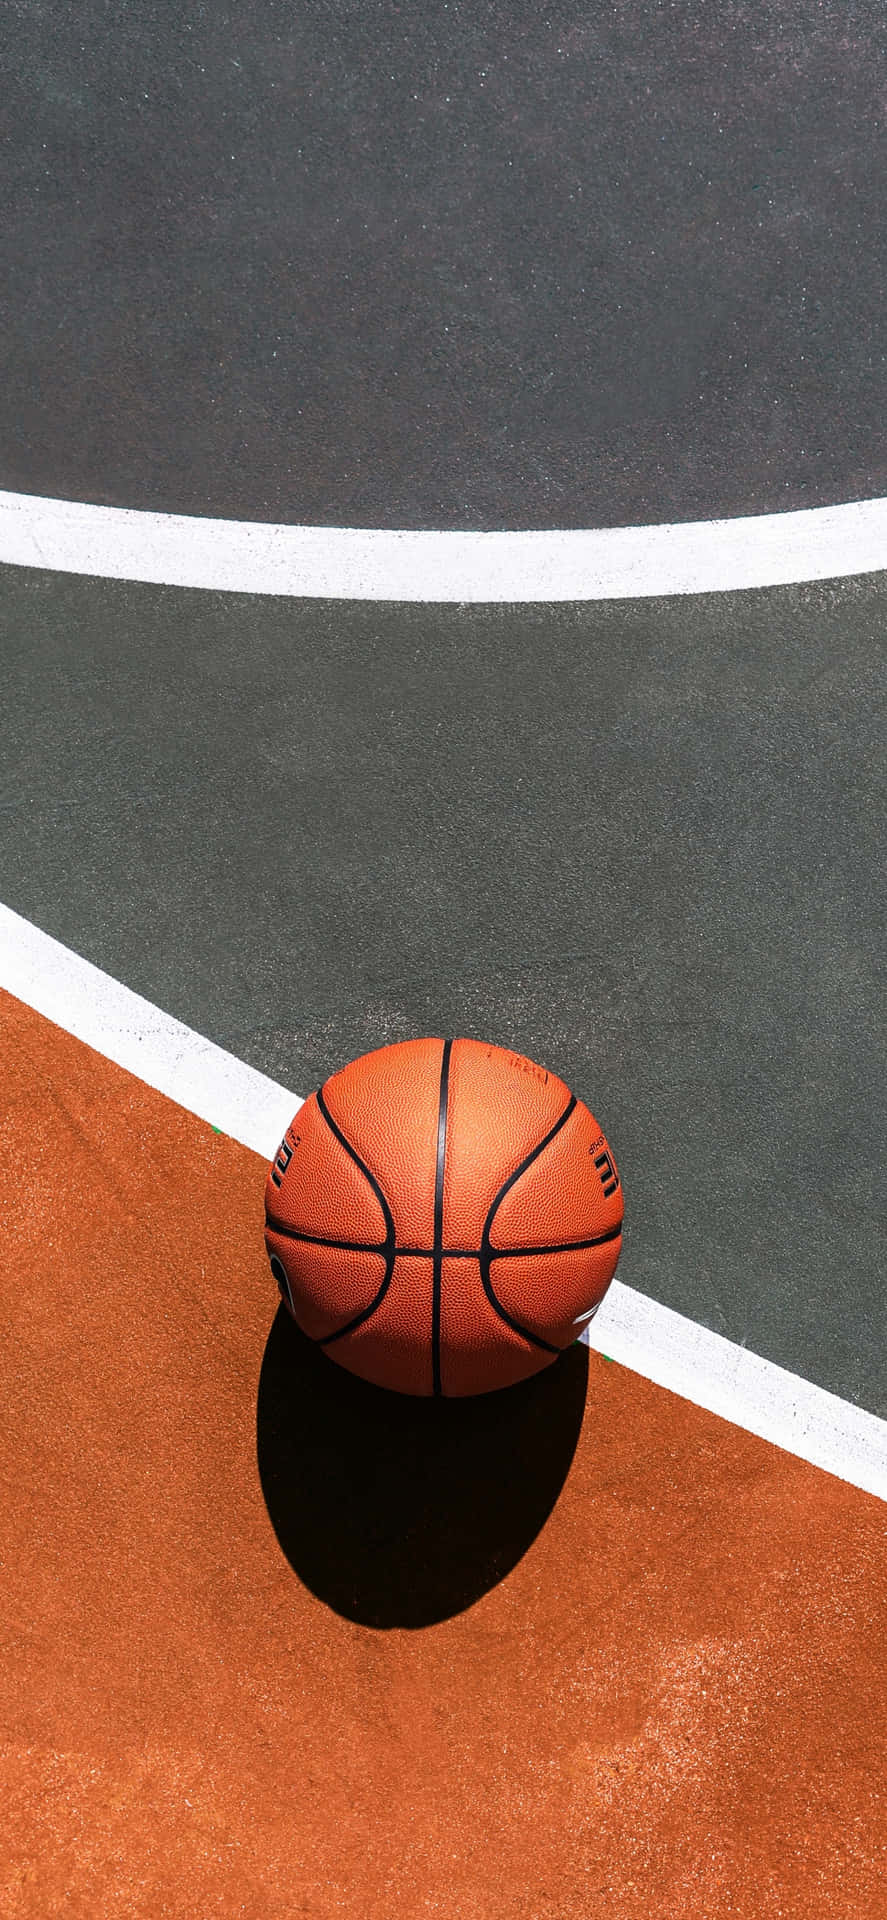 iPhone Xs Basketball Background